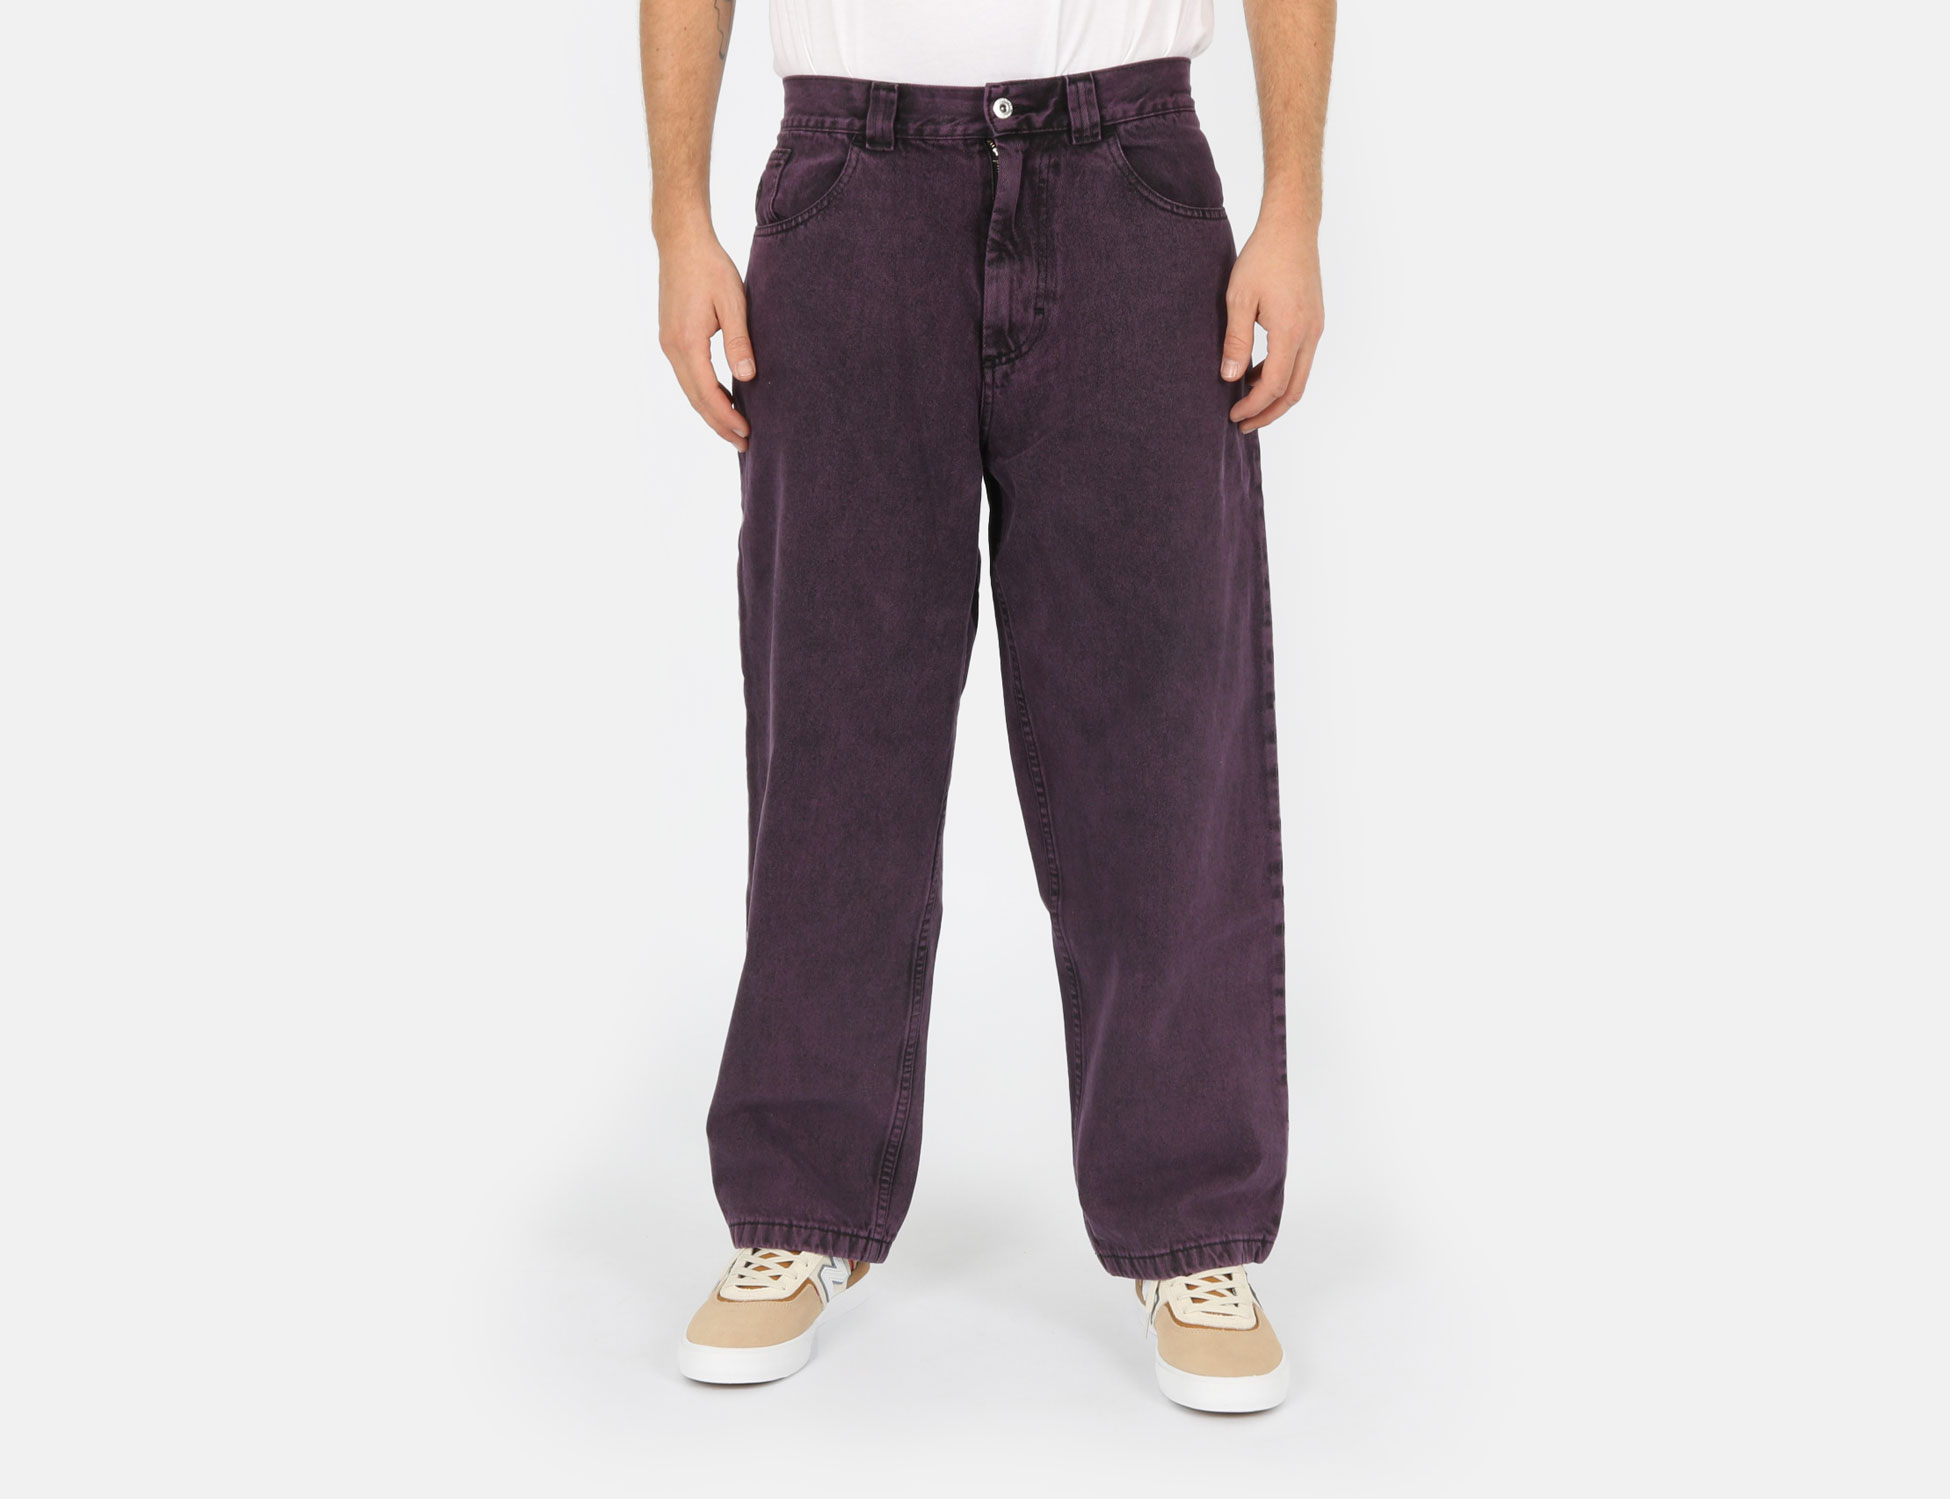 9,675円polar big boy jeans purple black S